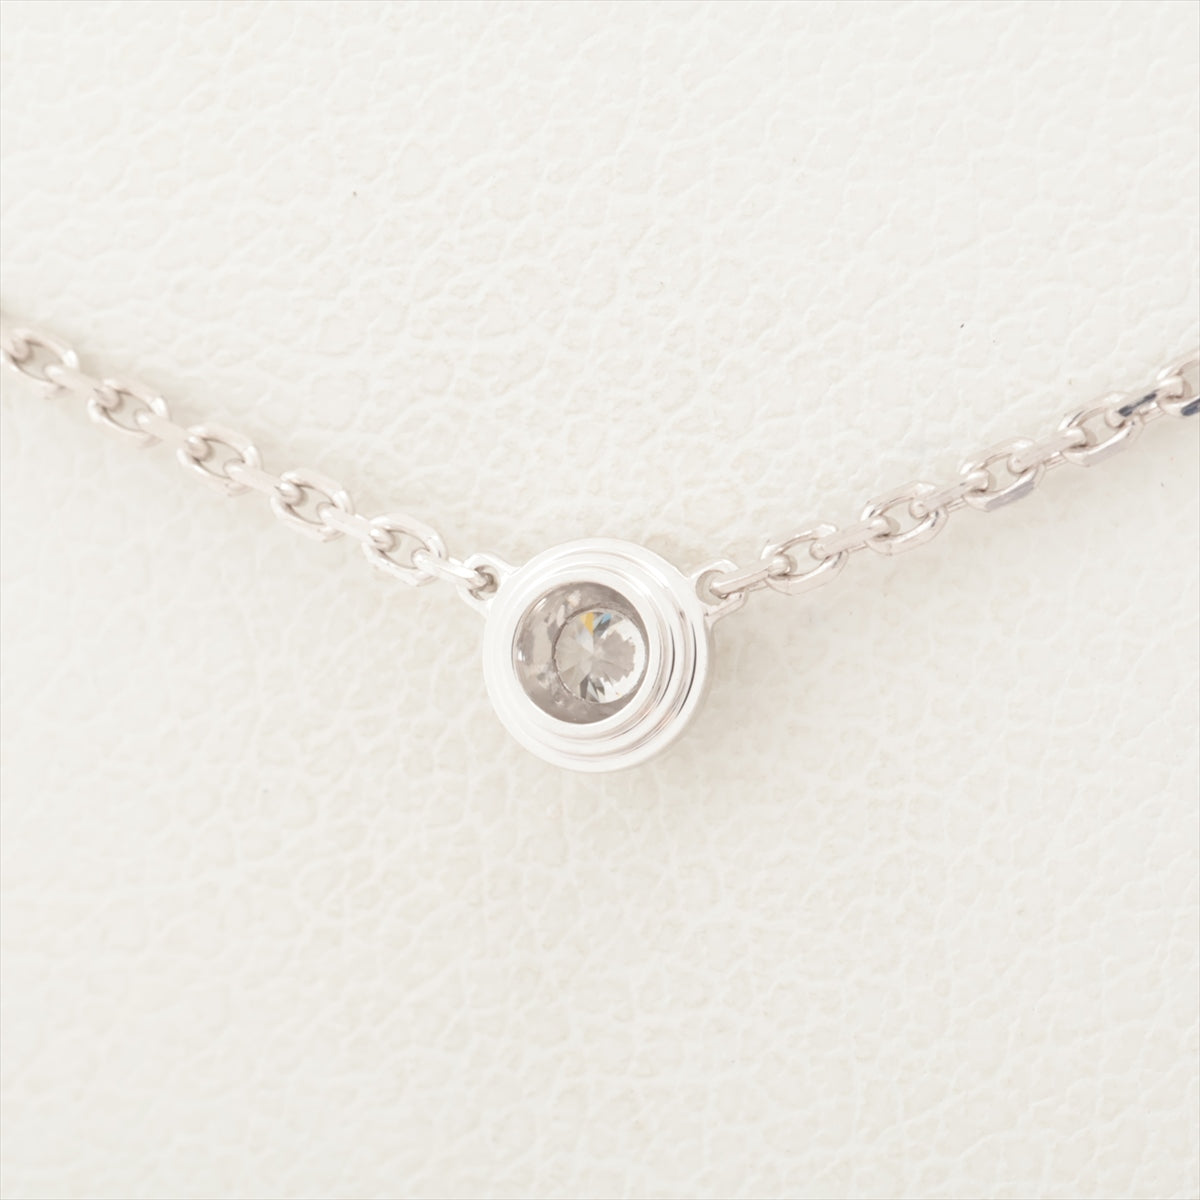 Cartier XS Diamond Necklace 750 (WG) 2.4g